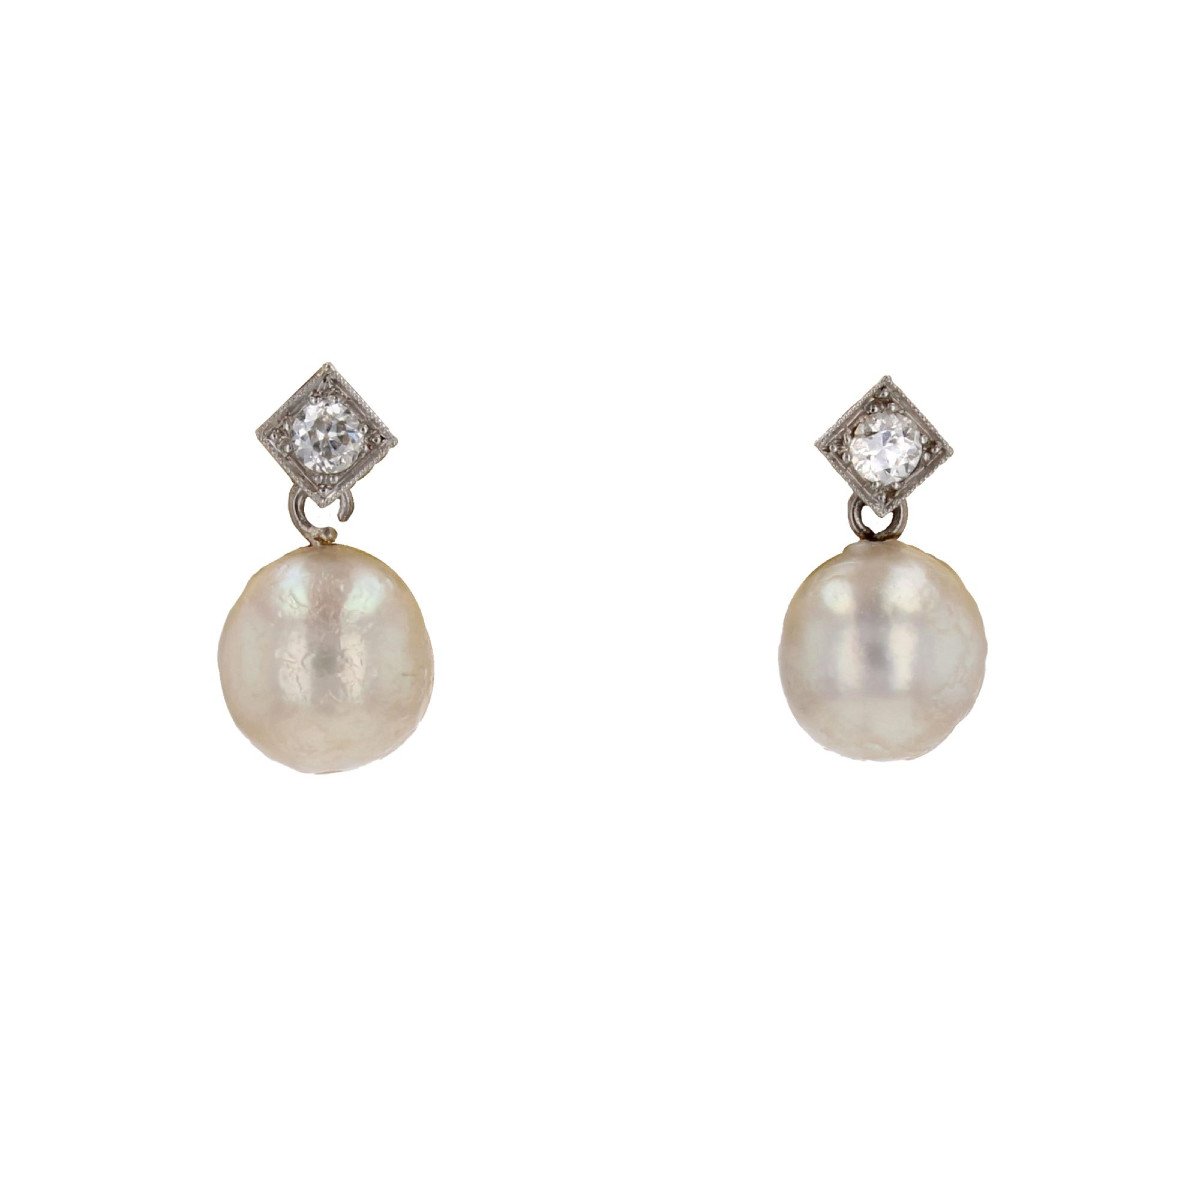 Antique Diamond Pearl Earrings